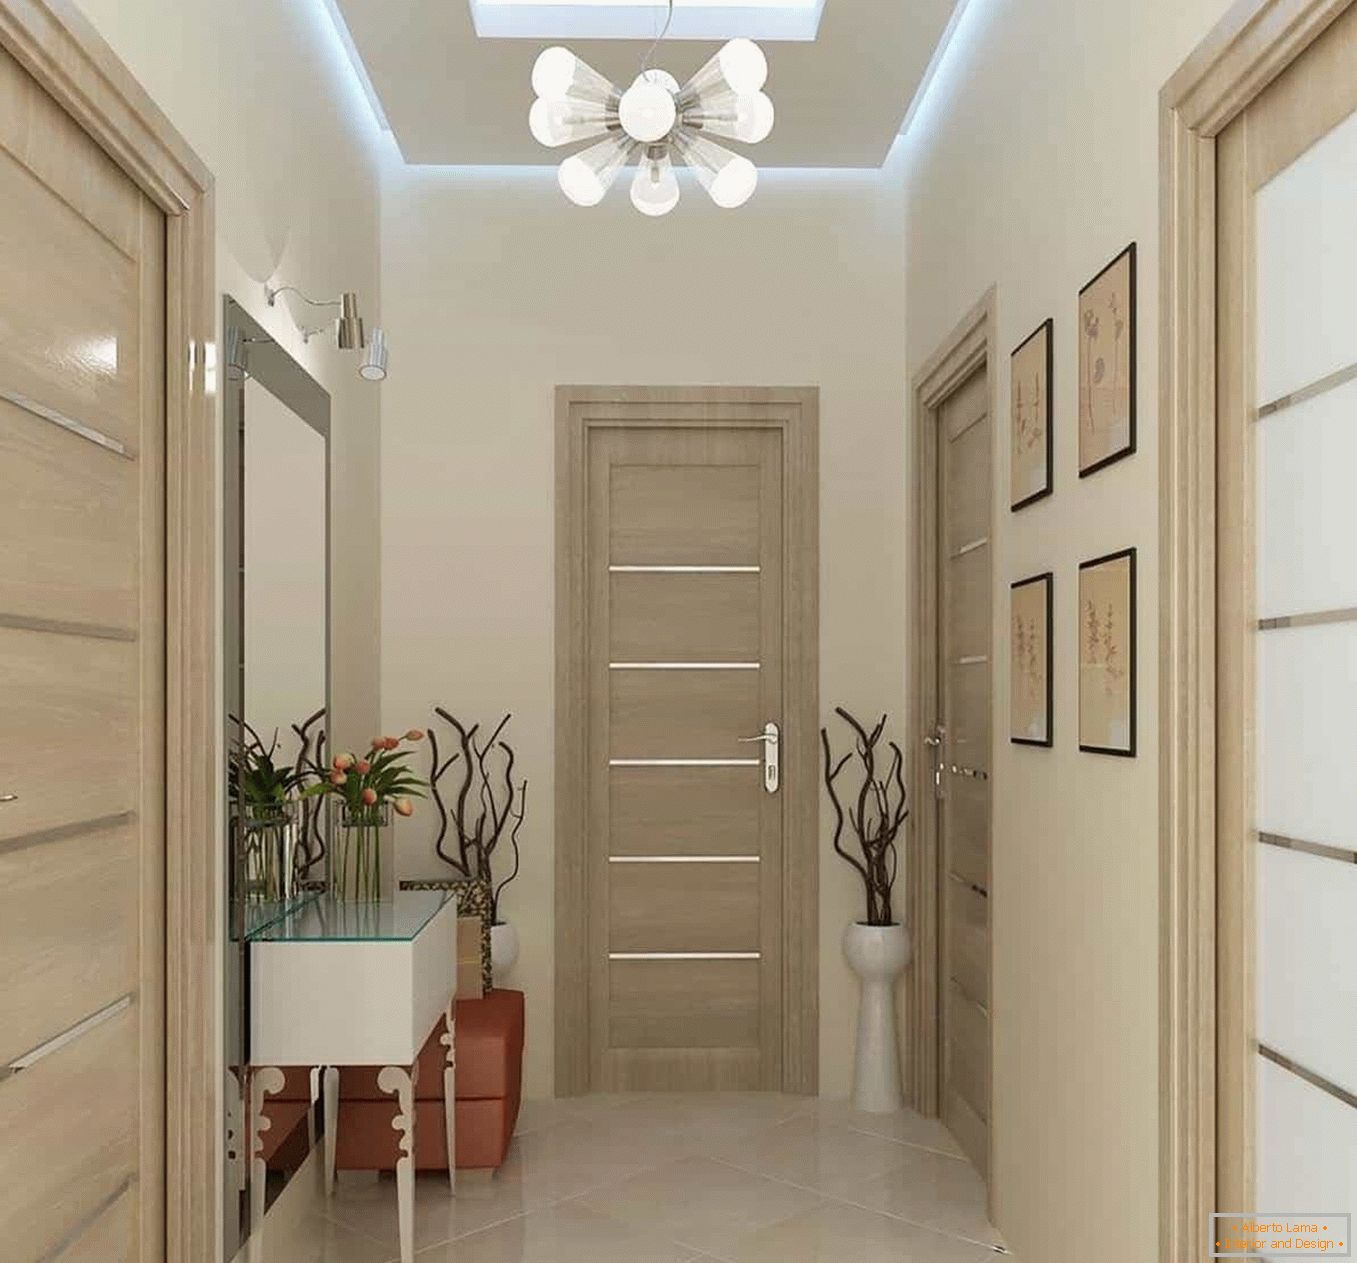 Light corridor, a combination of colors of walls and doors